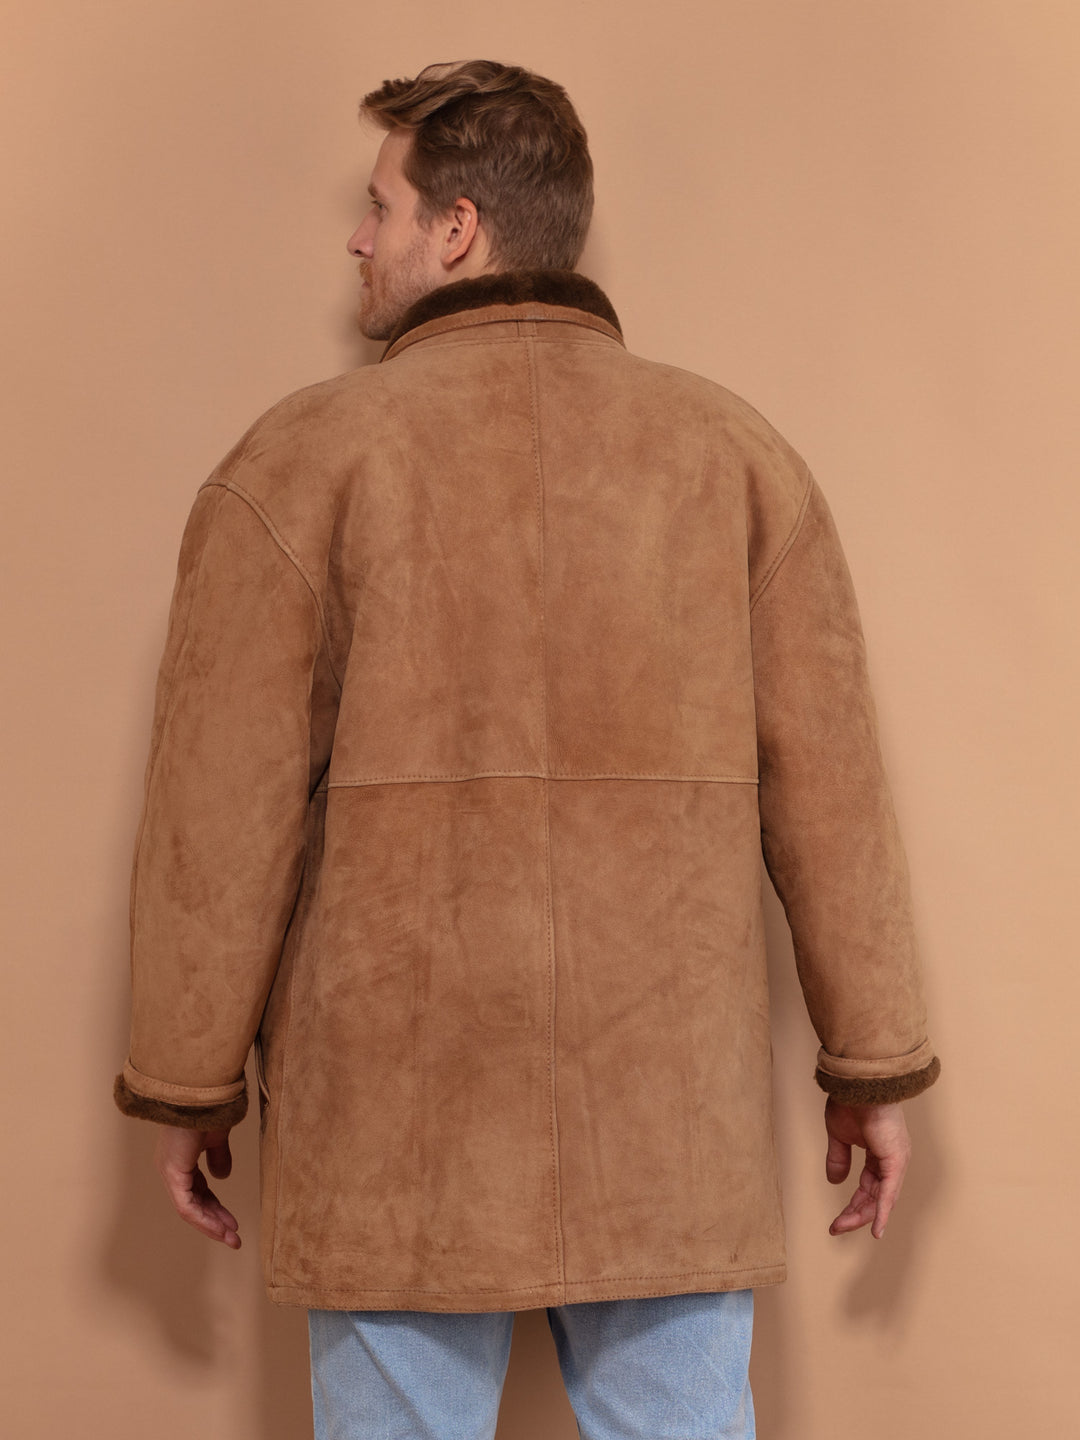 Brown Shearling Coat 70s, Size Large, Men Sheepskin Leather Coat, Button Up Winter Coat, Retro Outerwear, Vintage Fashion, Western Jacket